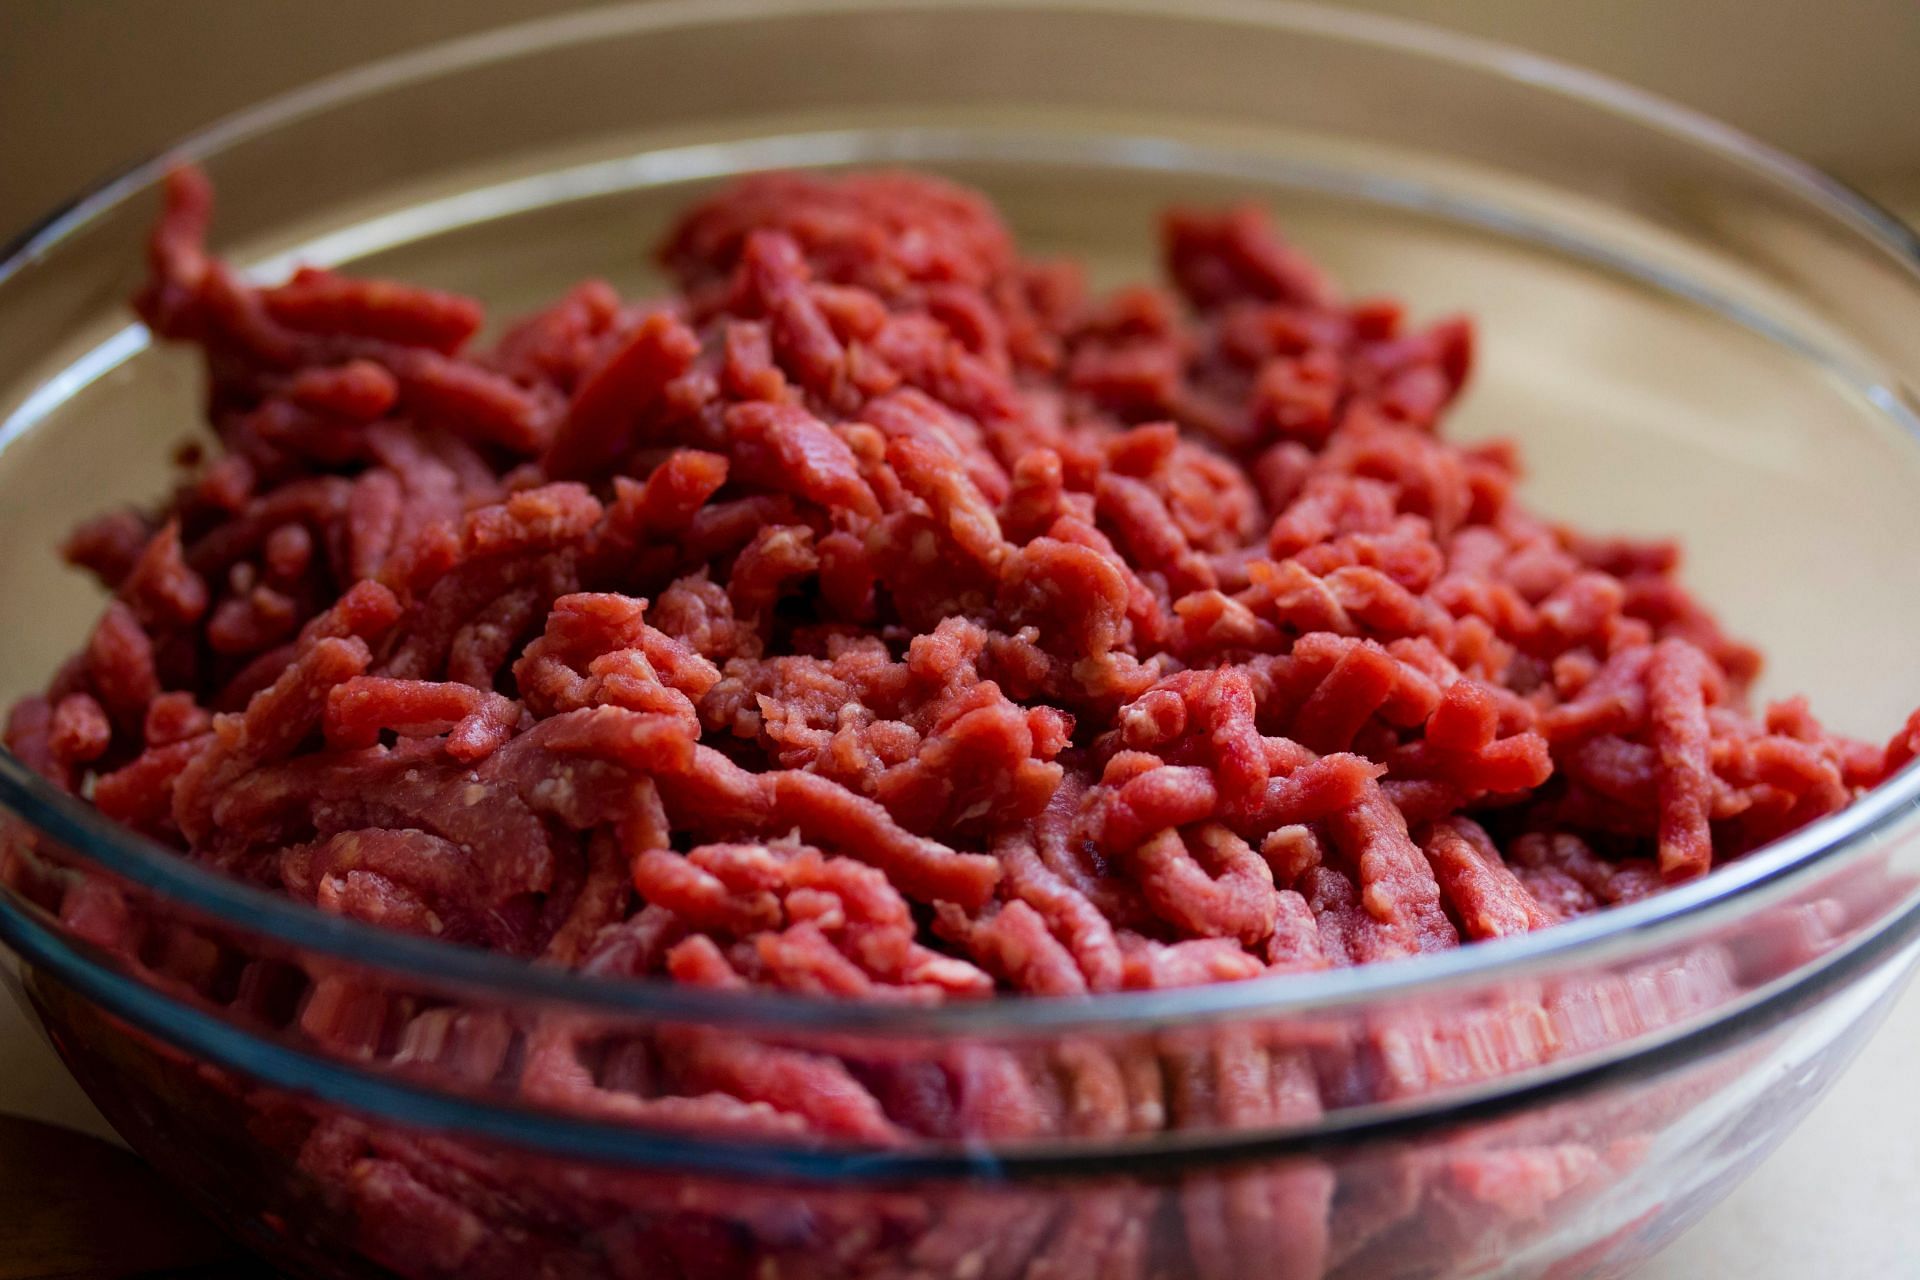 Lean ground beef is a good source of protein. (Image via Pexels/ Angele J)